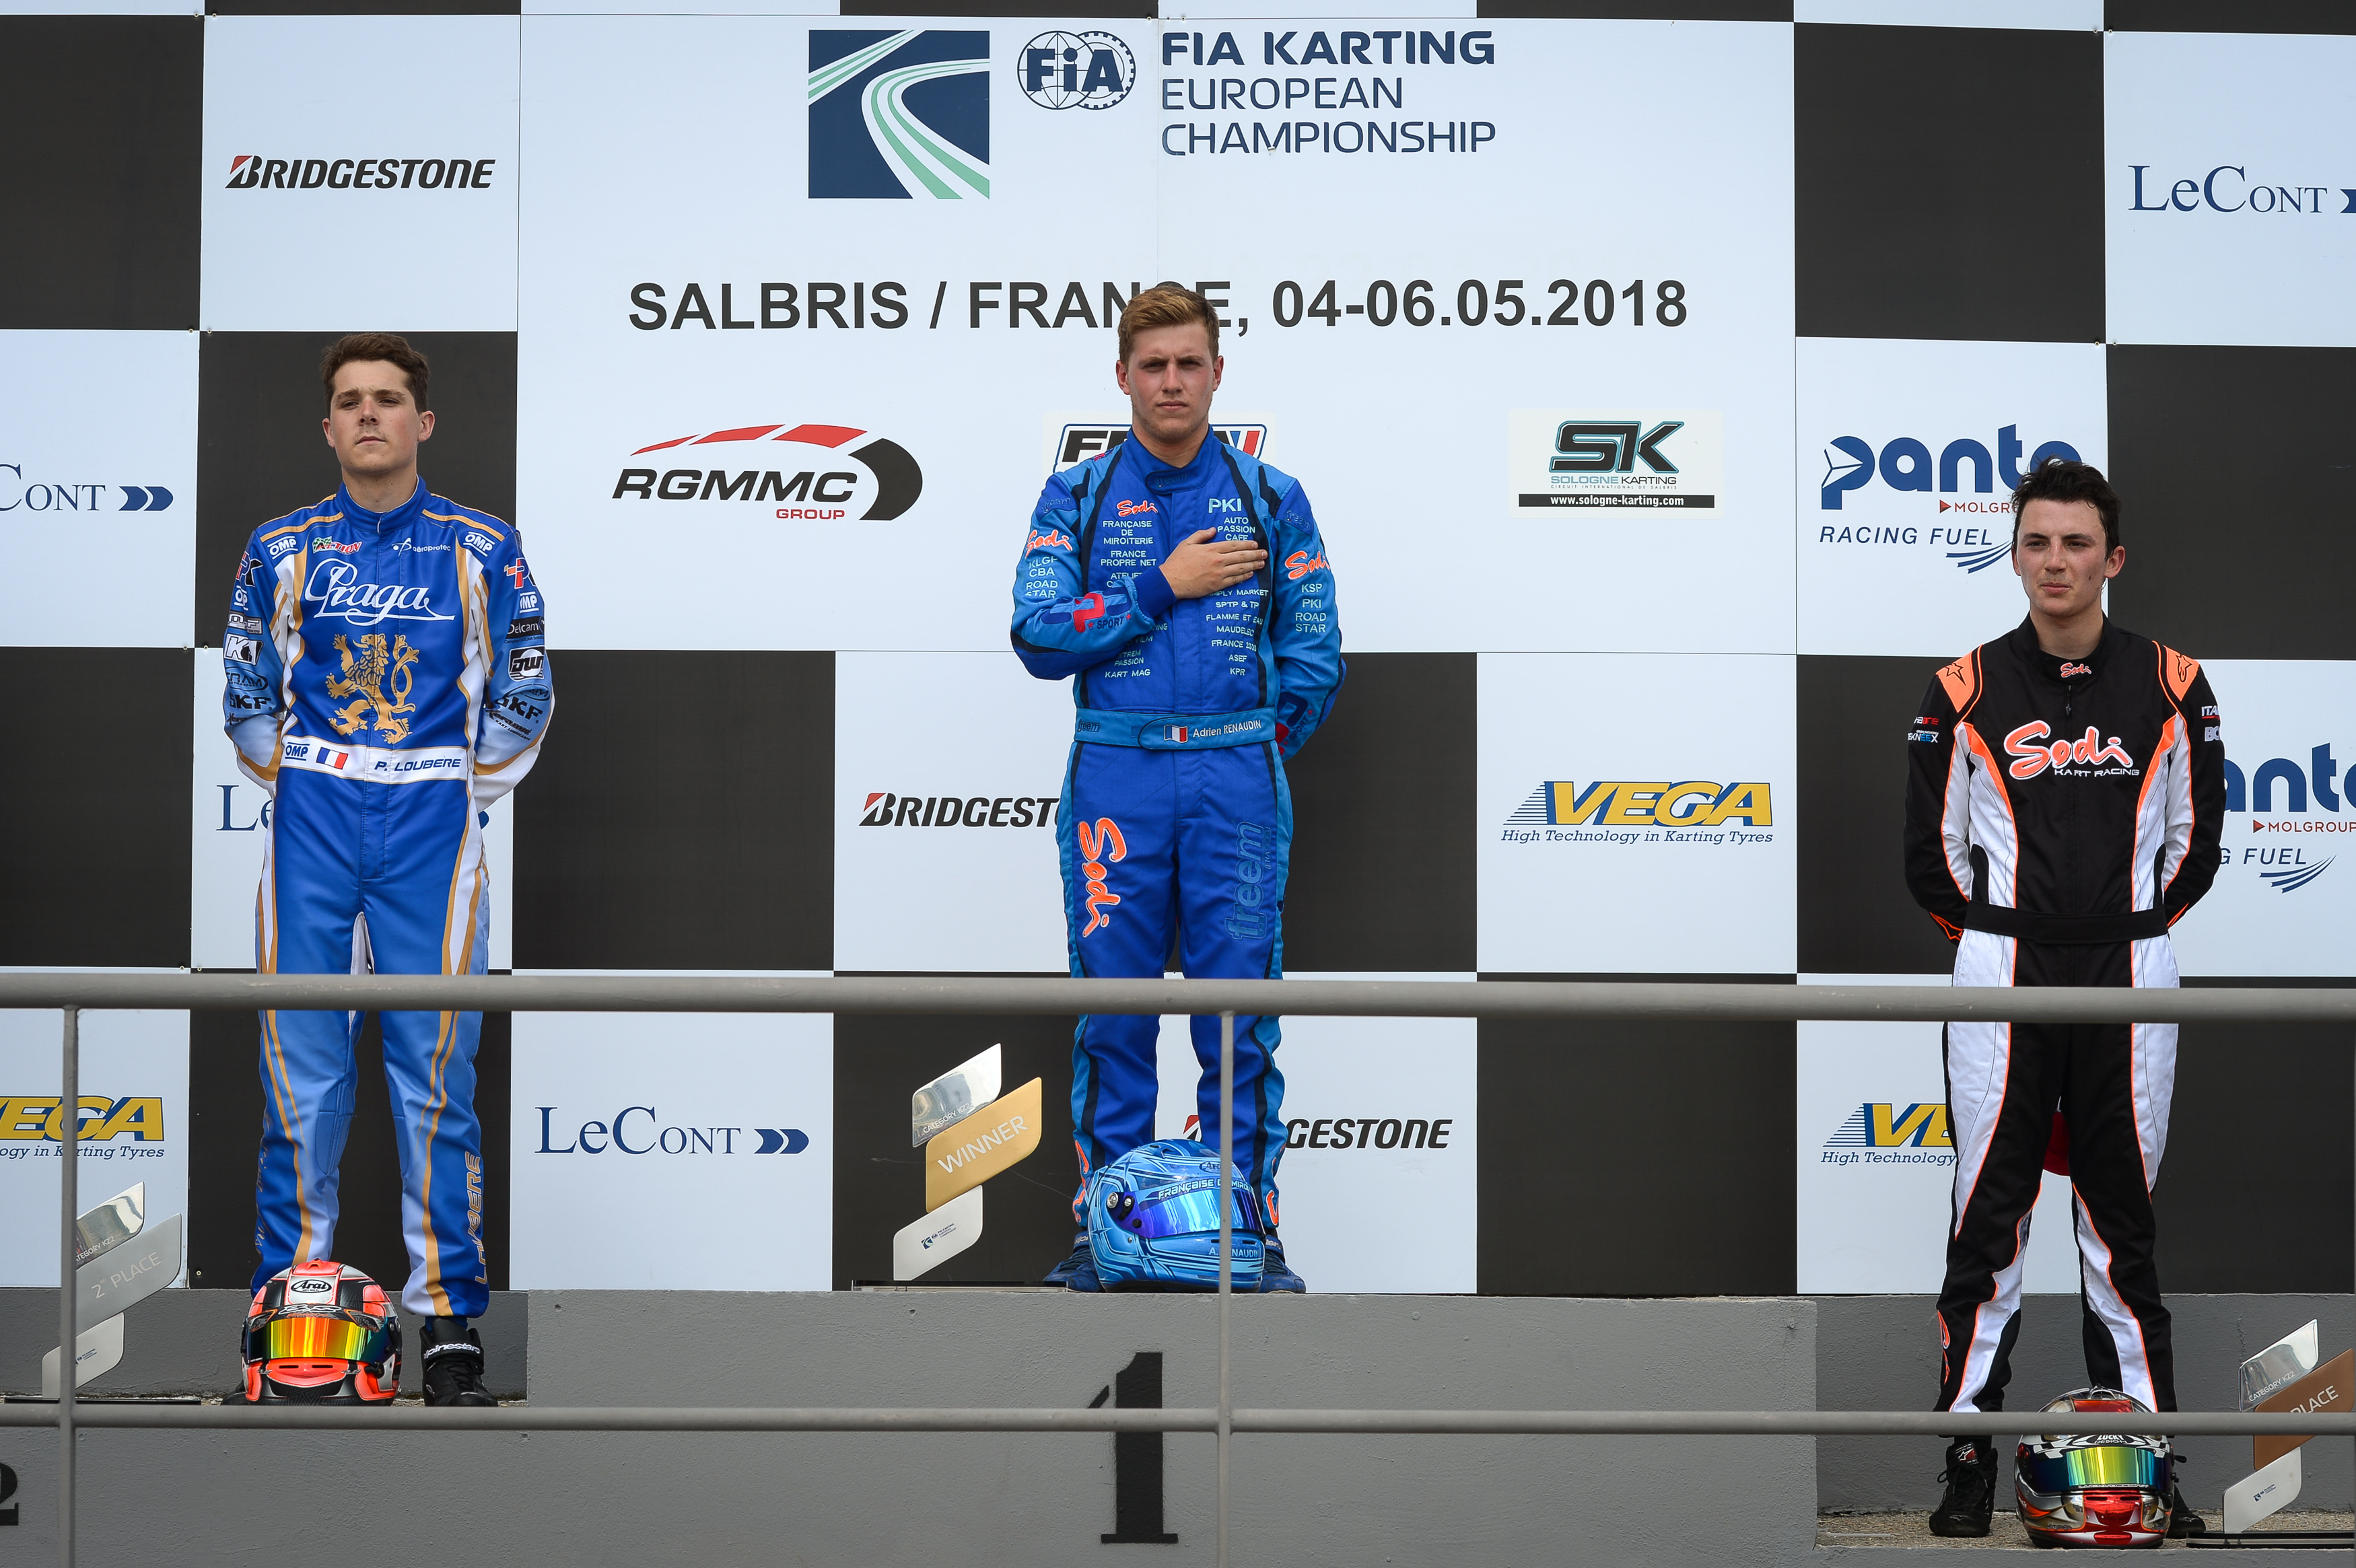 Le podium (Photo Cik FIA/KSP)